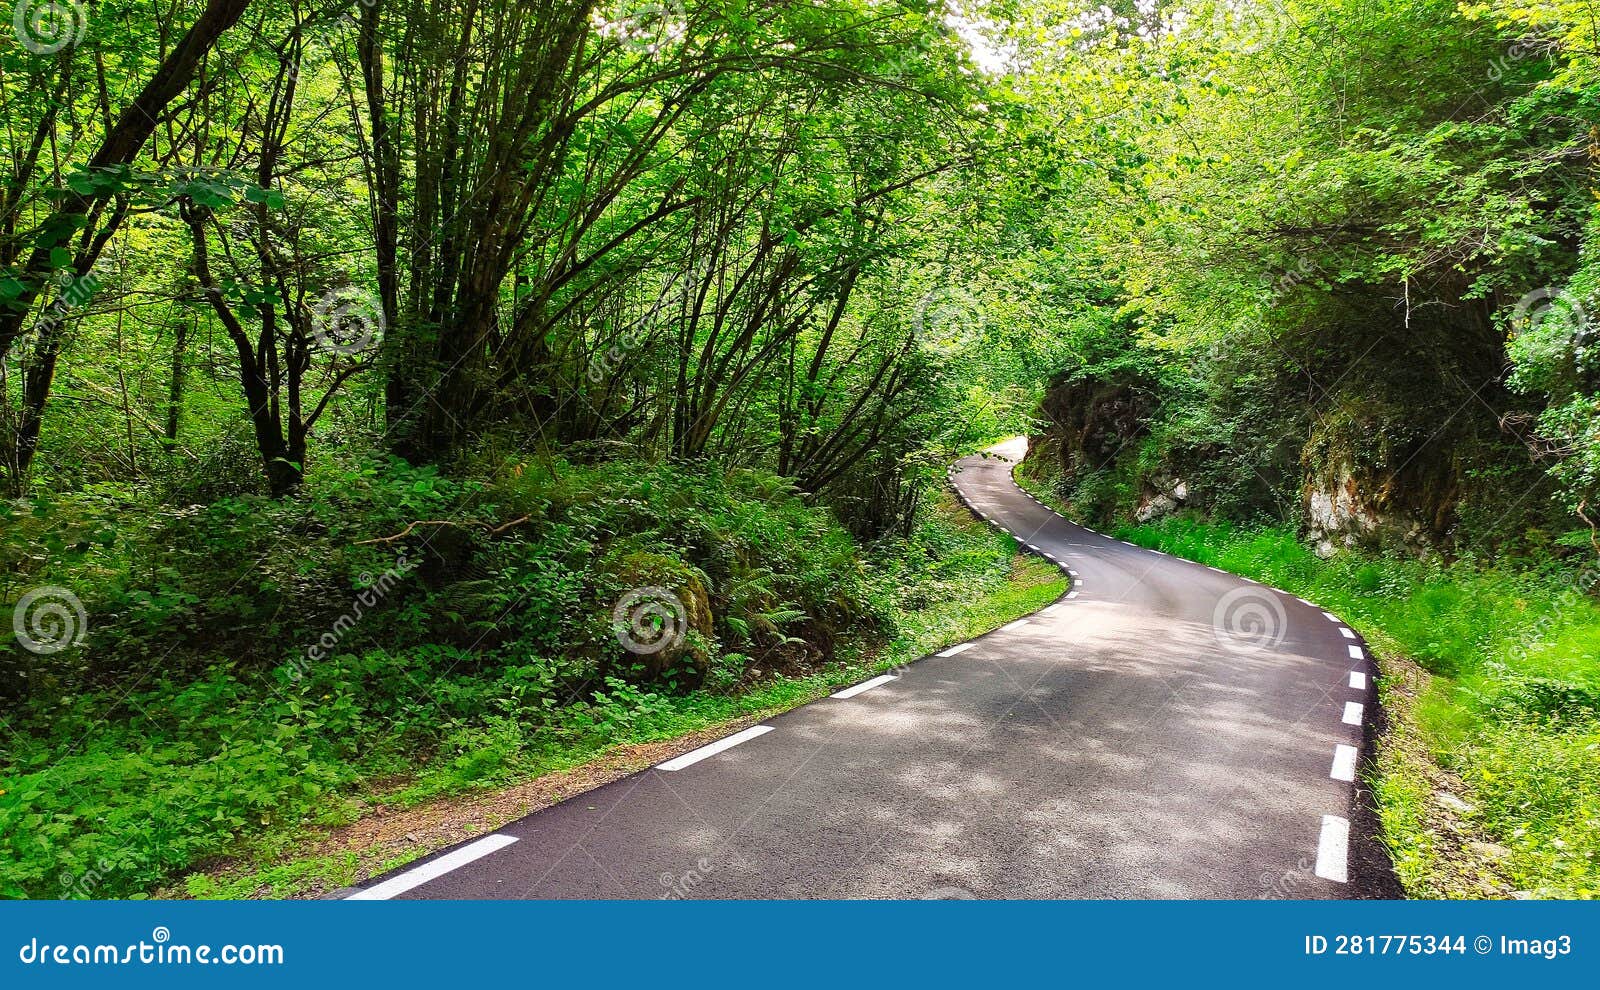 a small road through a forest from la marea to el moru, pilona municipality, asturias, spain, europe